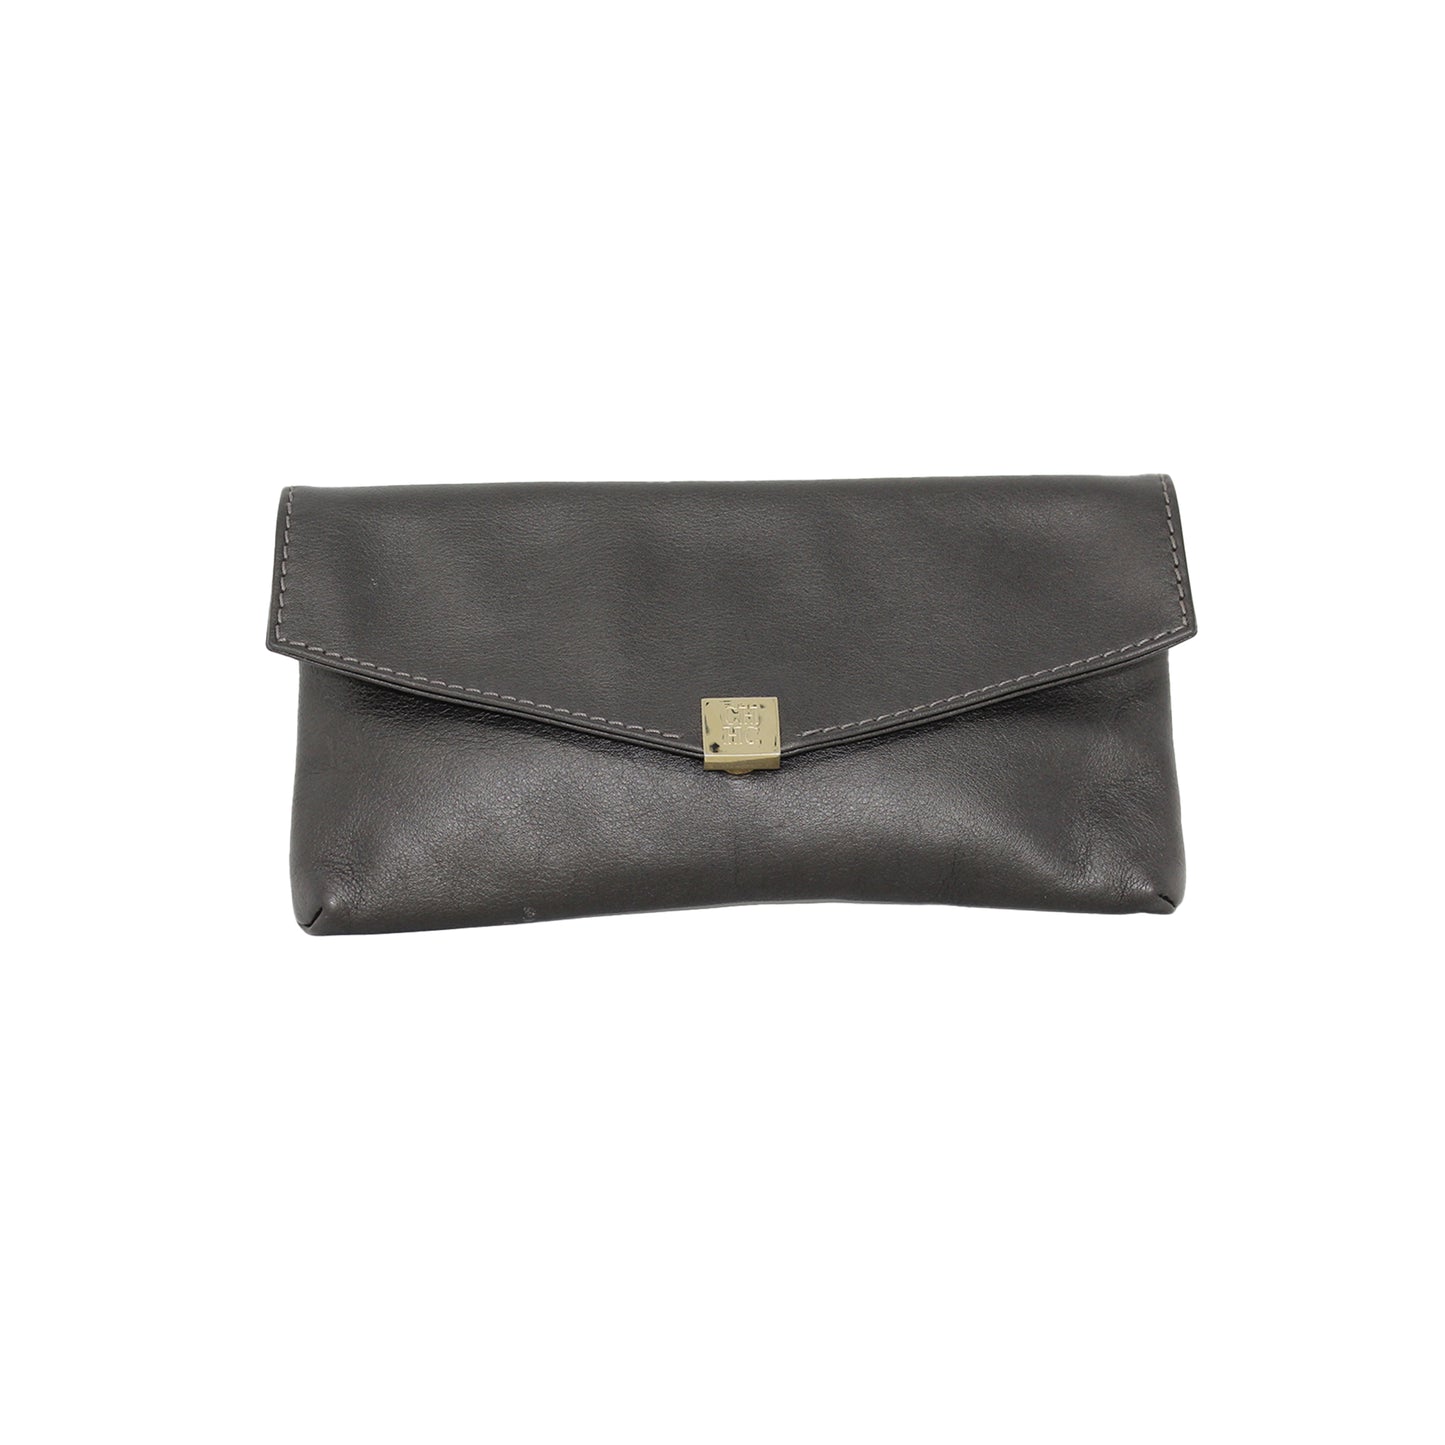 Carolina Herrera Leather Envelope Clutch